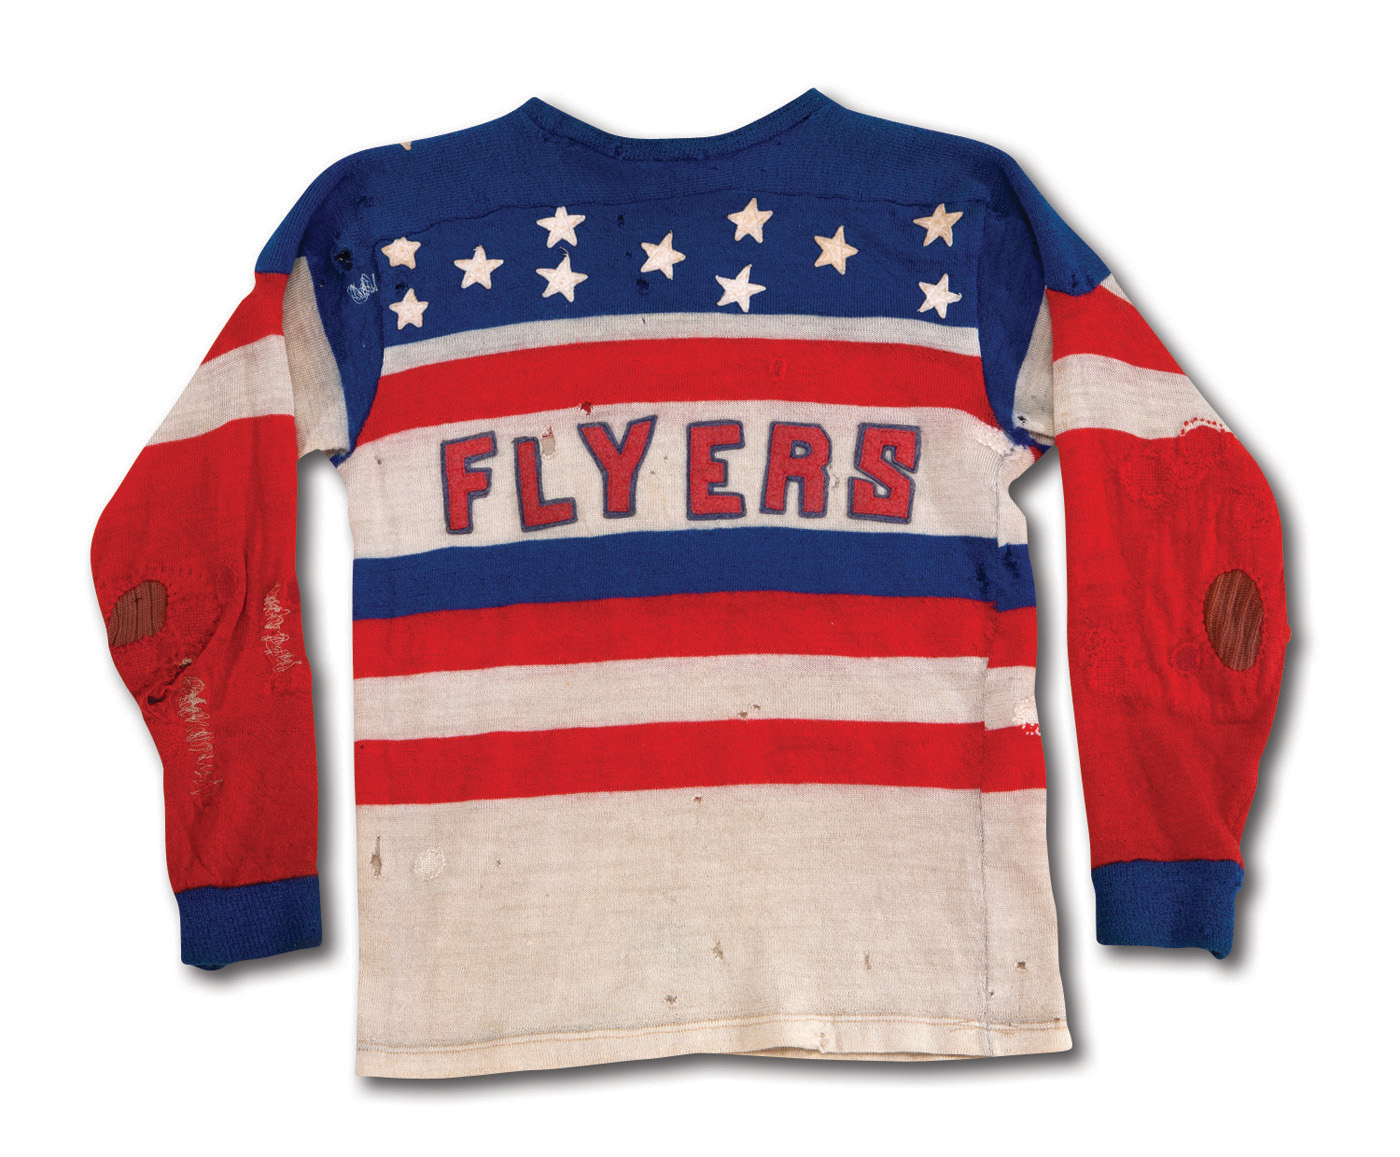 St. Louis Flyers, Vintage Hockey Apparel